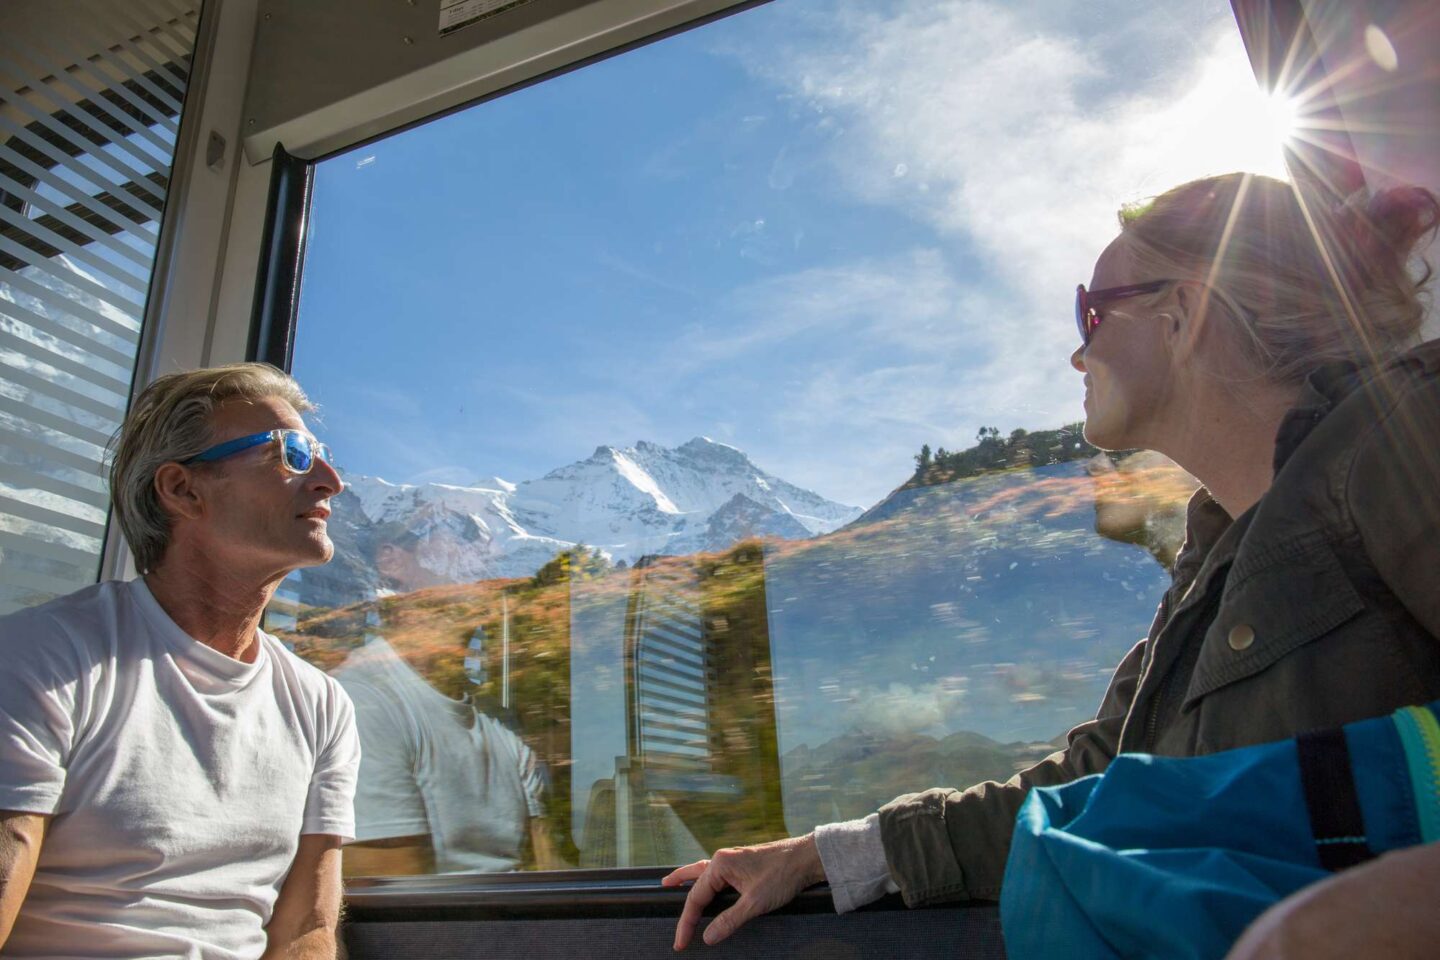 couple enjoying alpine views from train istk